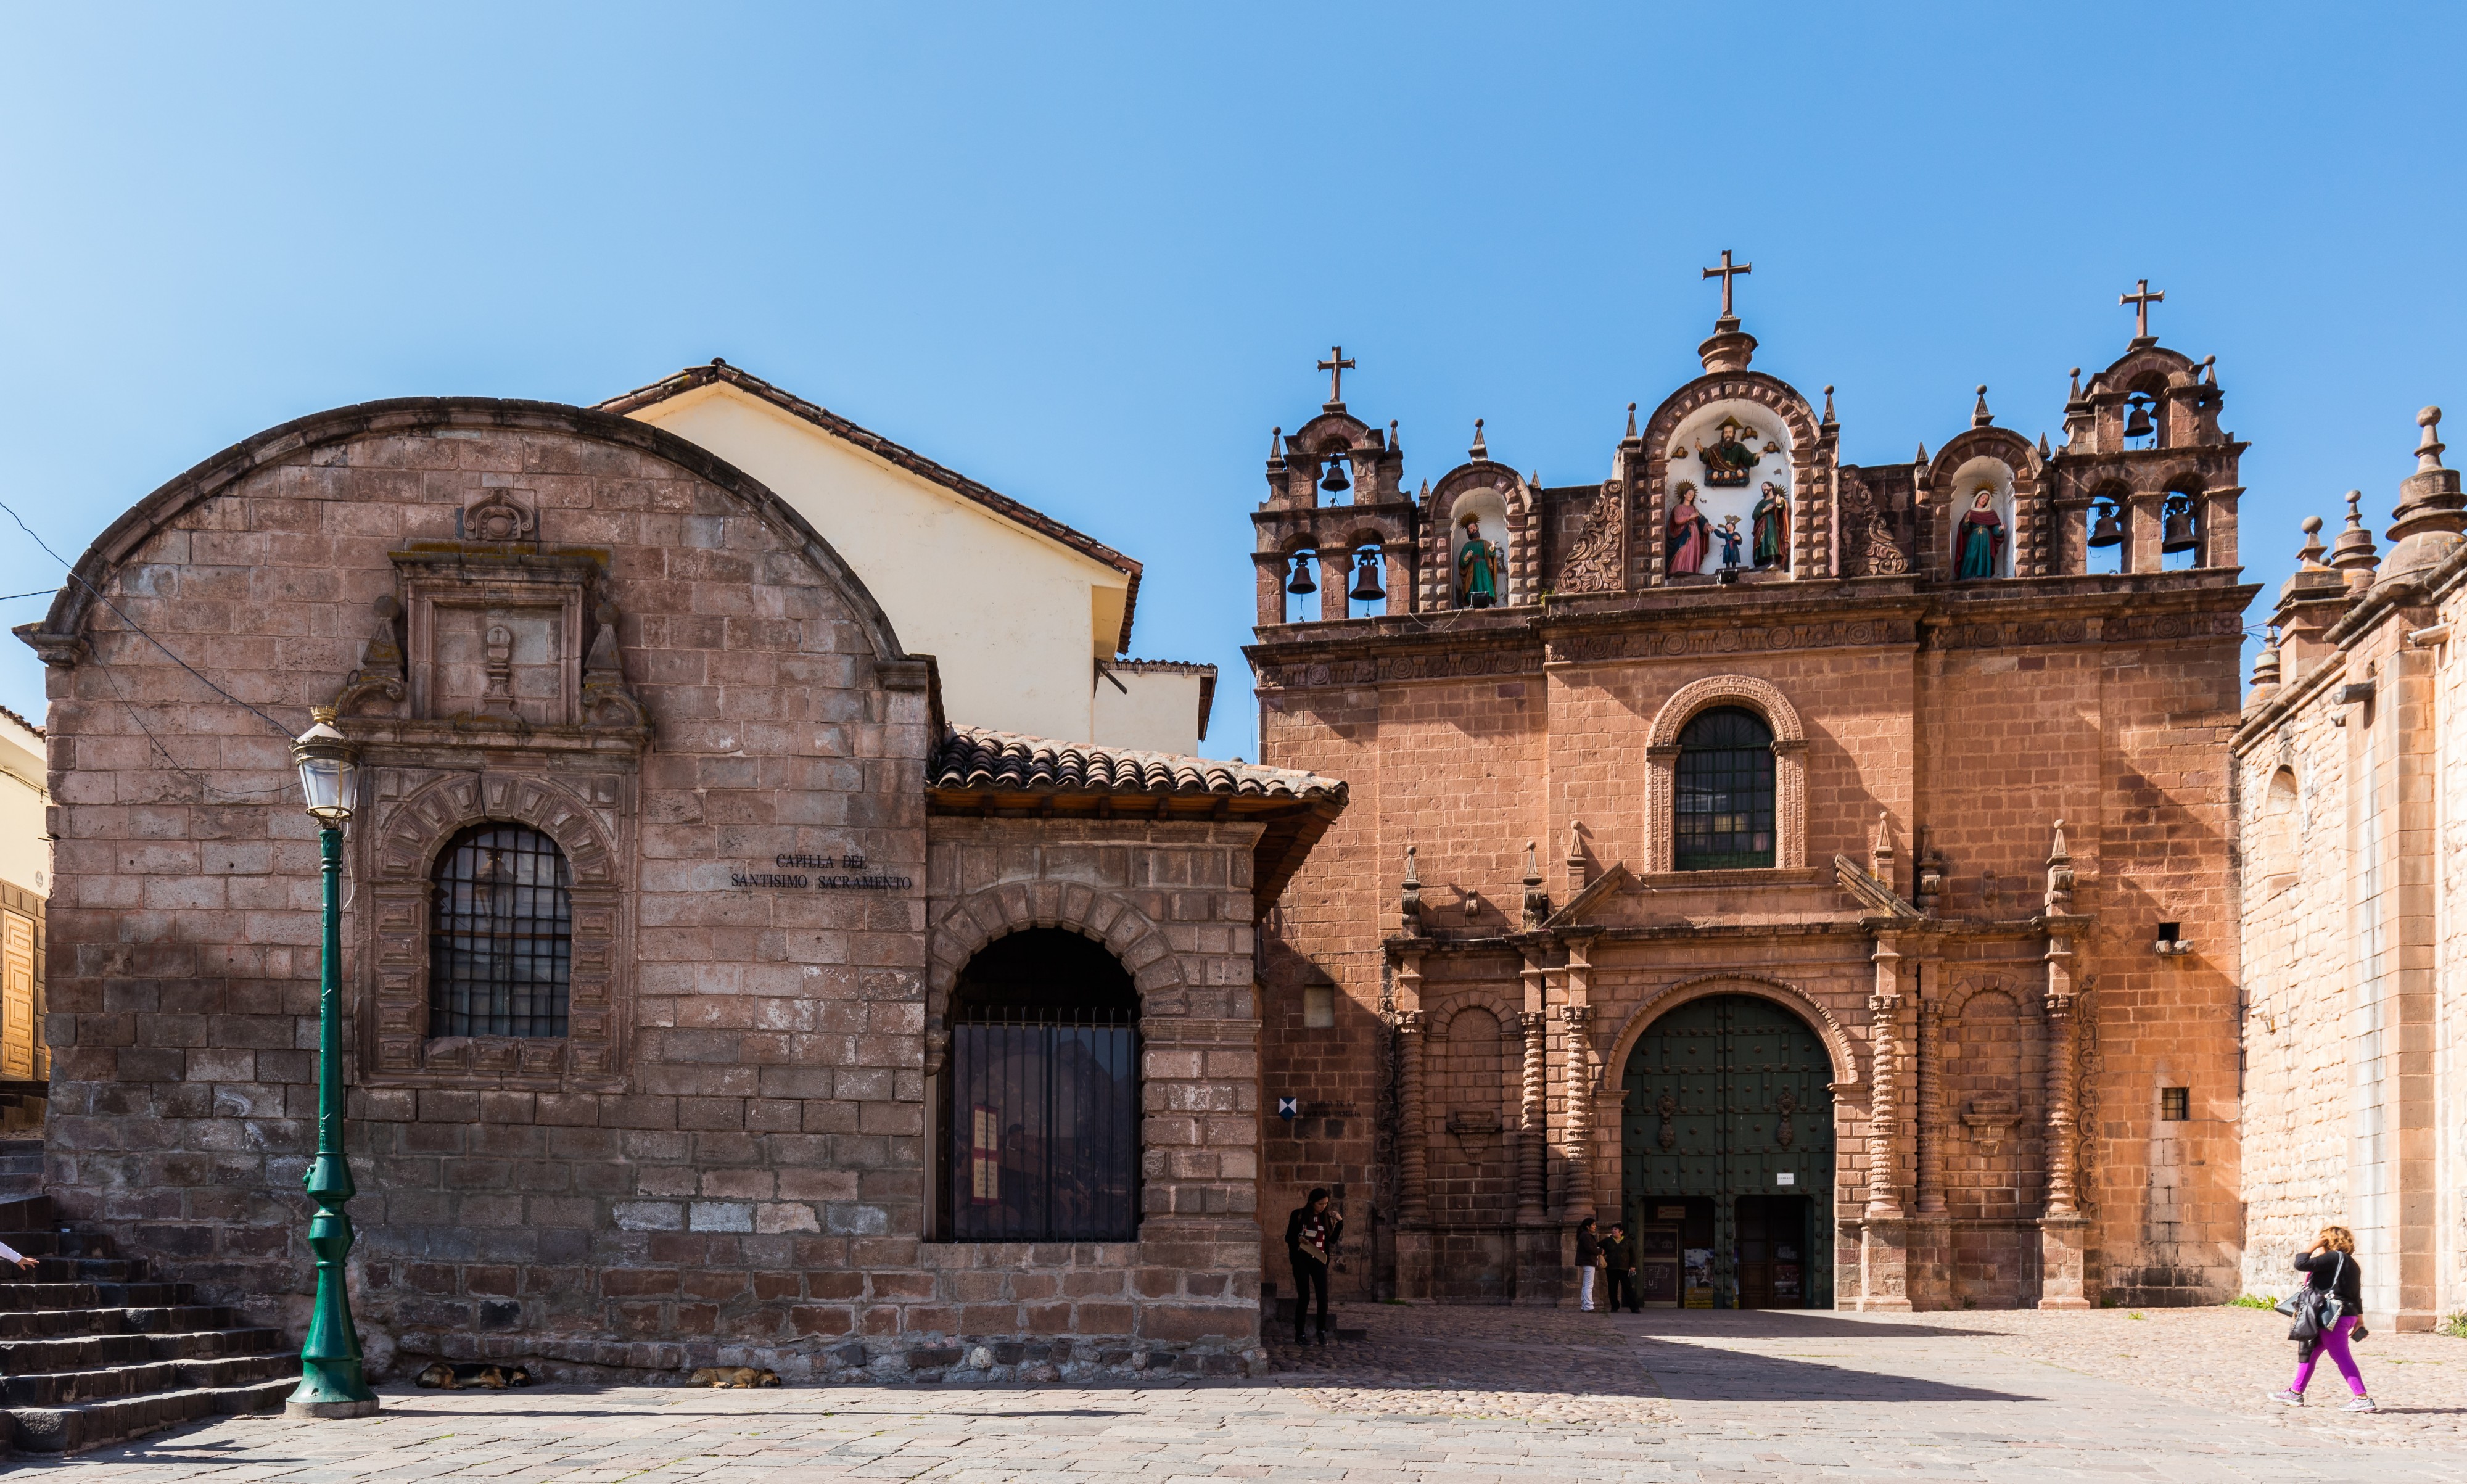 Catedral, Plaza de Armas, Cusco, Perú, 2015-07-31, DD 77